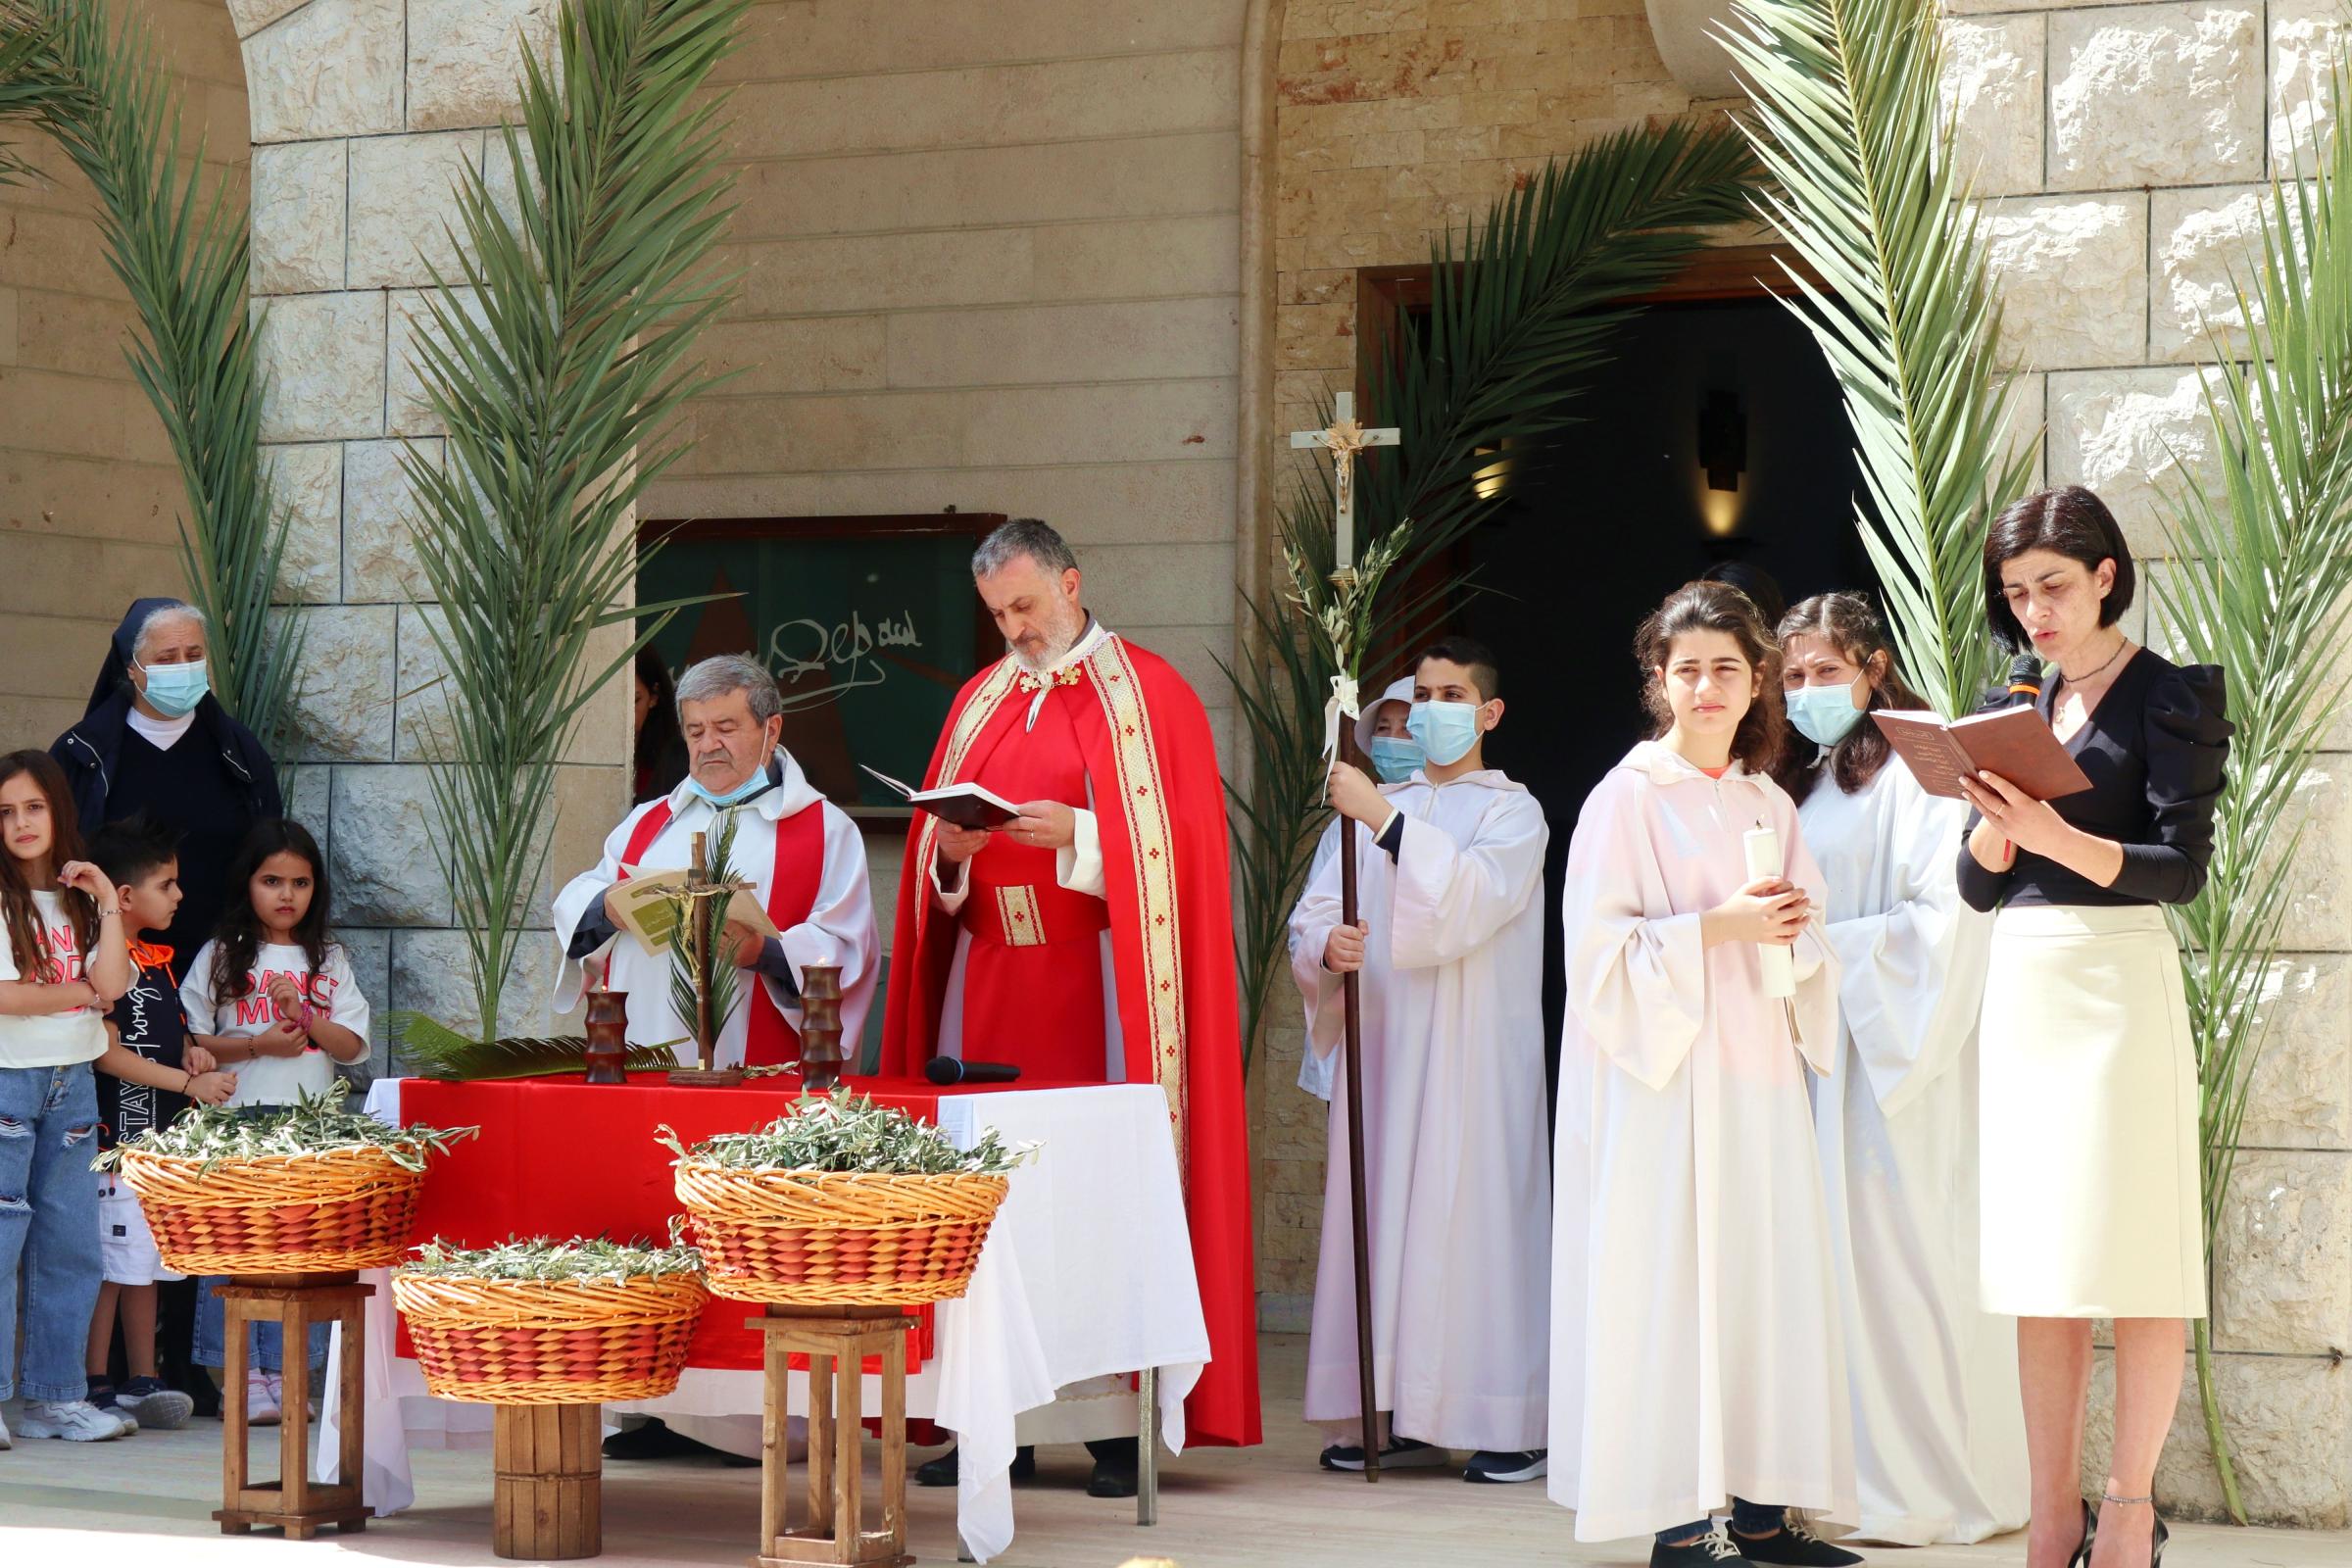 Libano - Lebanon - Palm Sunday celebration at St Joseph christian church in...